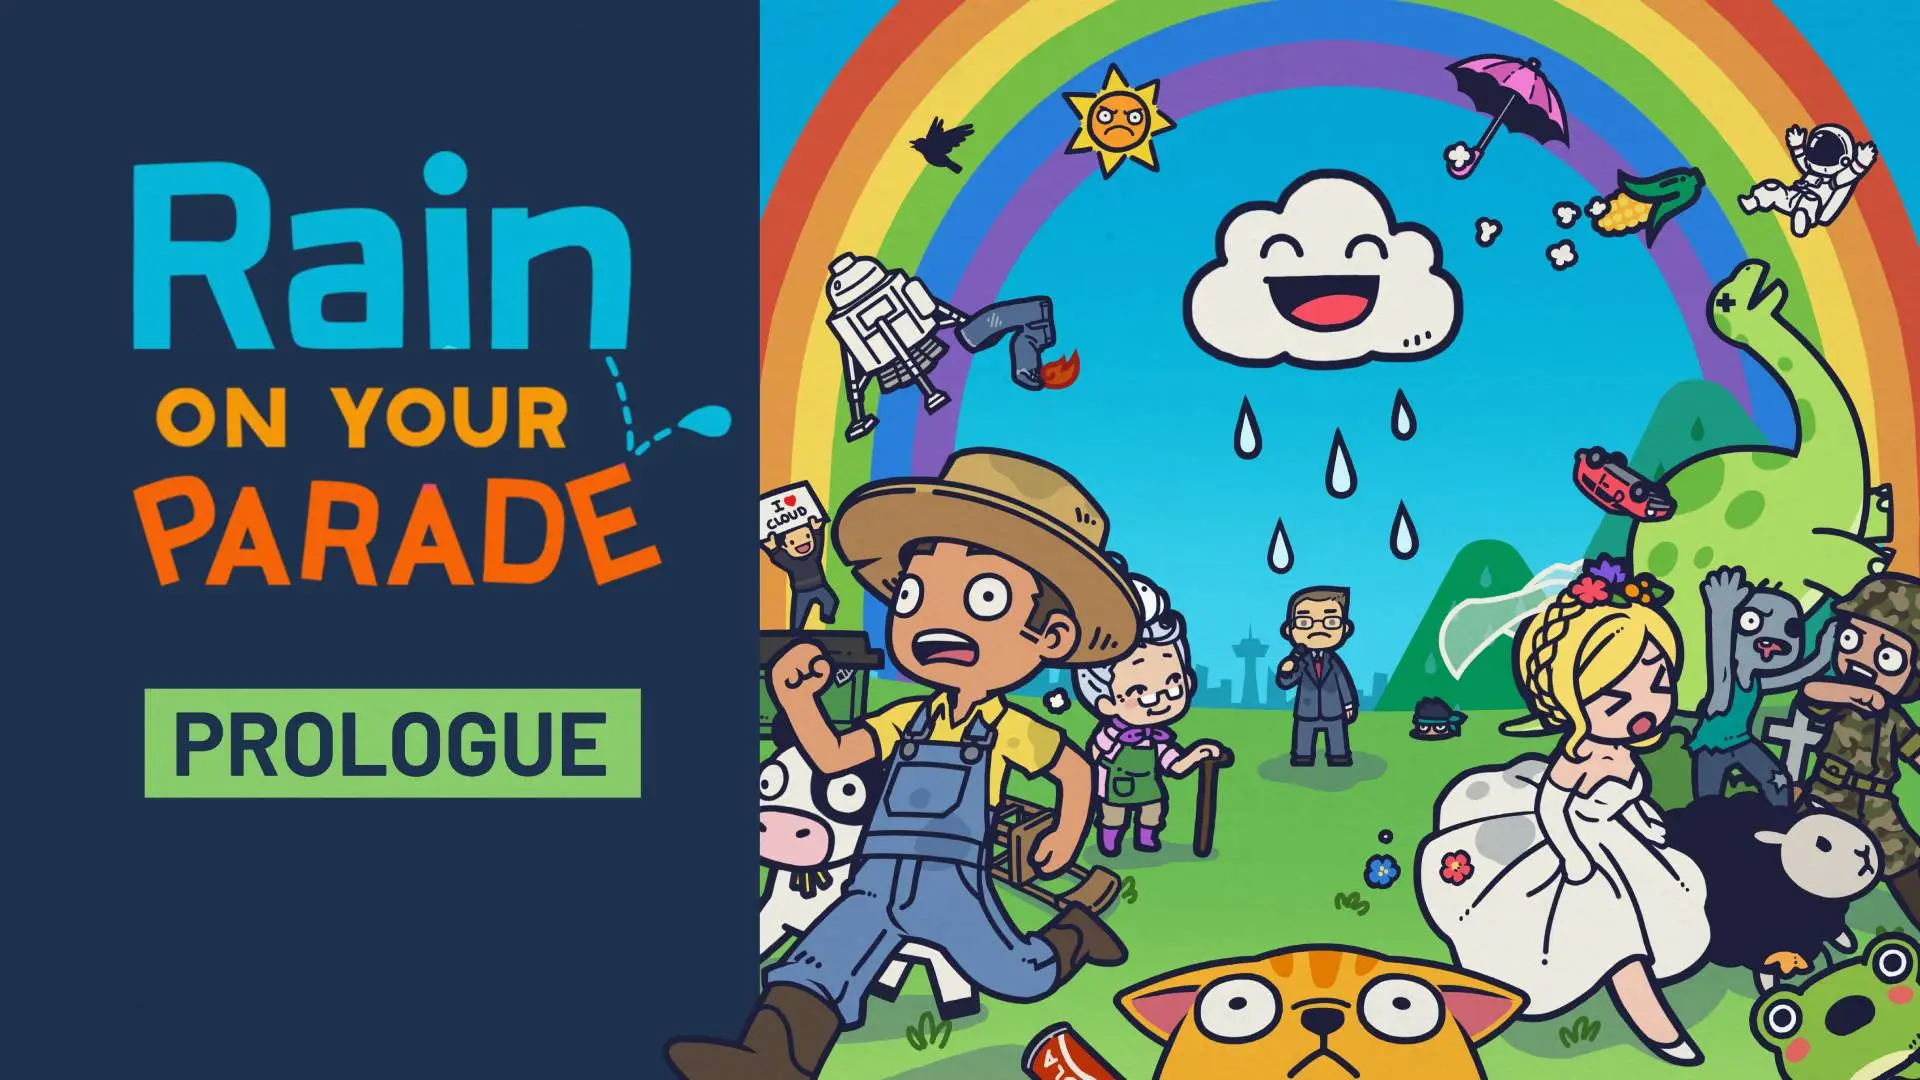 Rain on Your Parade Prologue: Game yang Bakal Bikin Ketawa